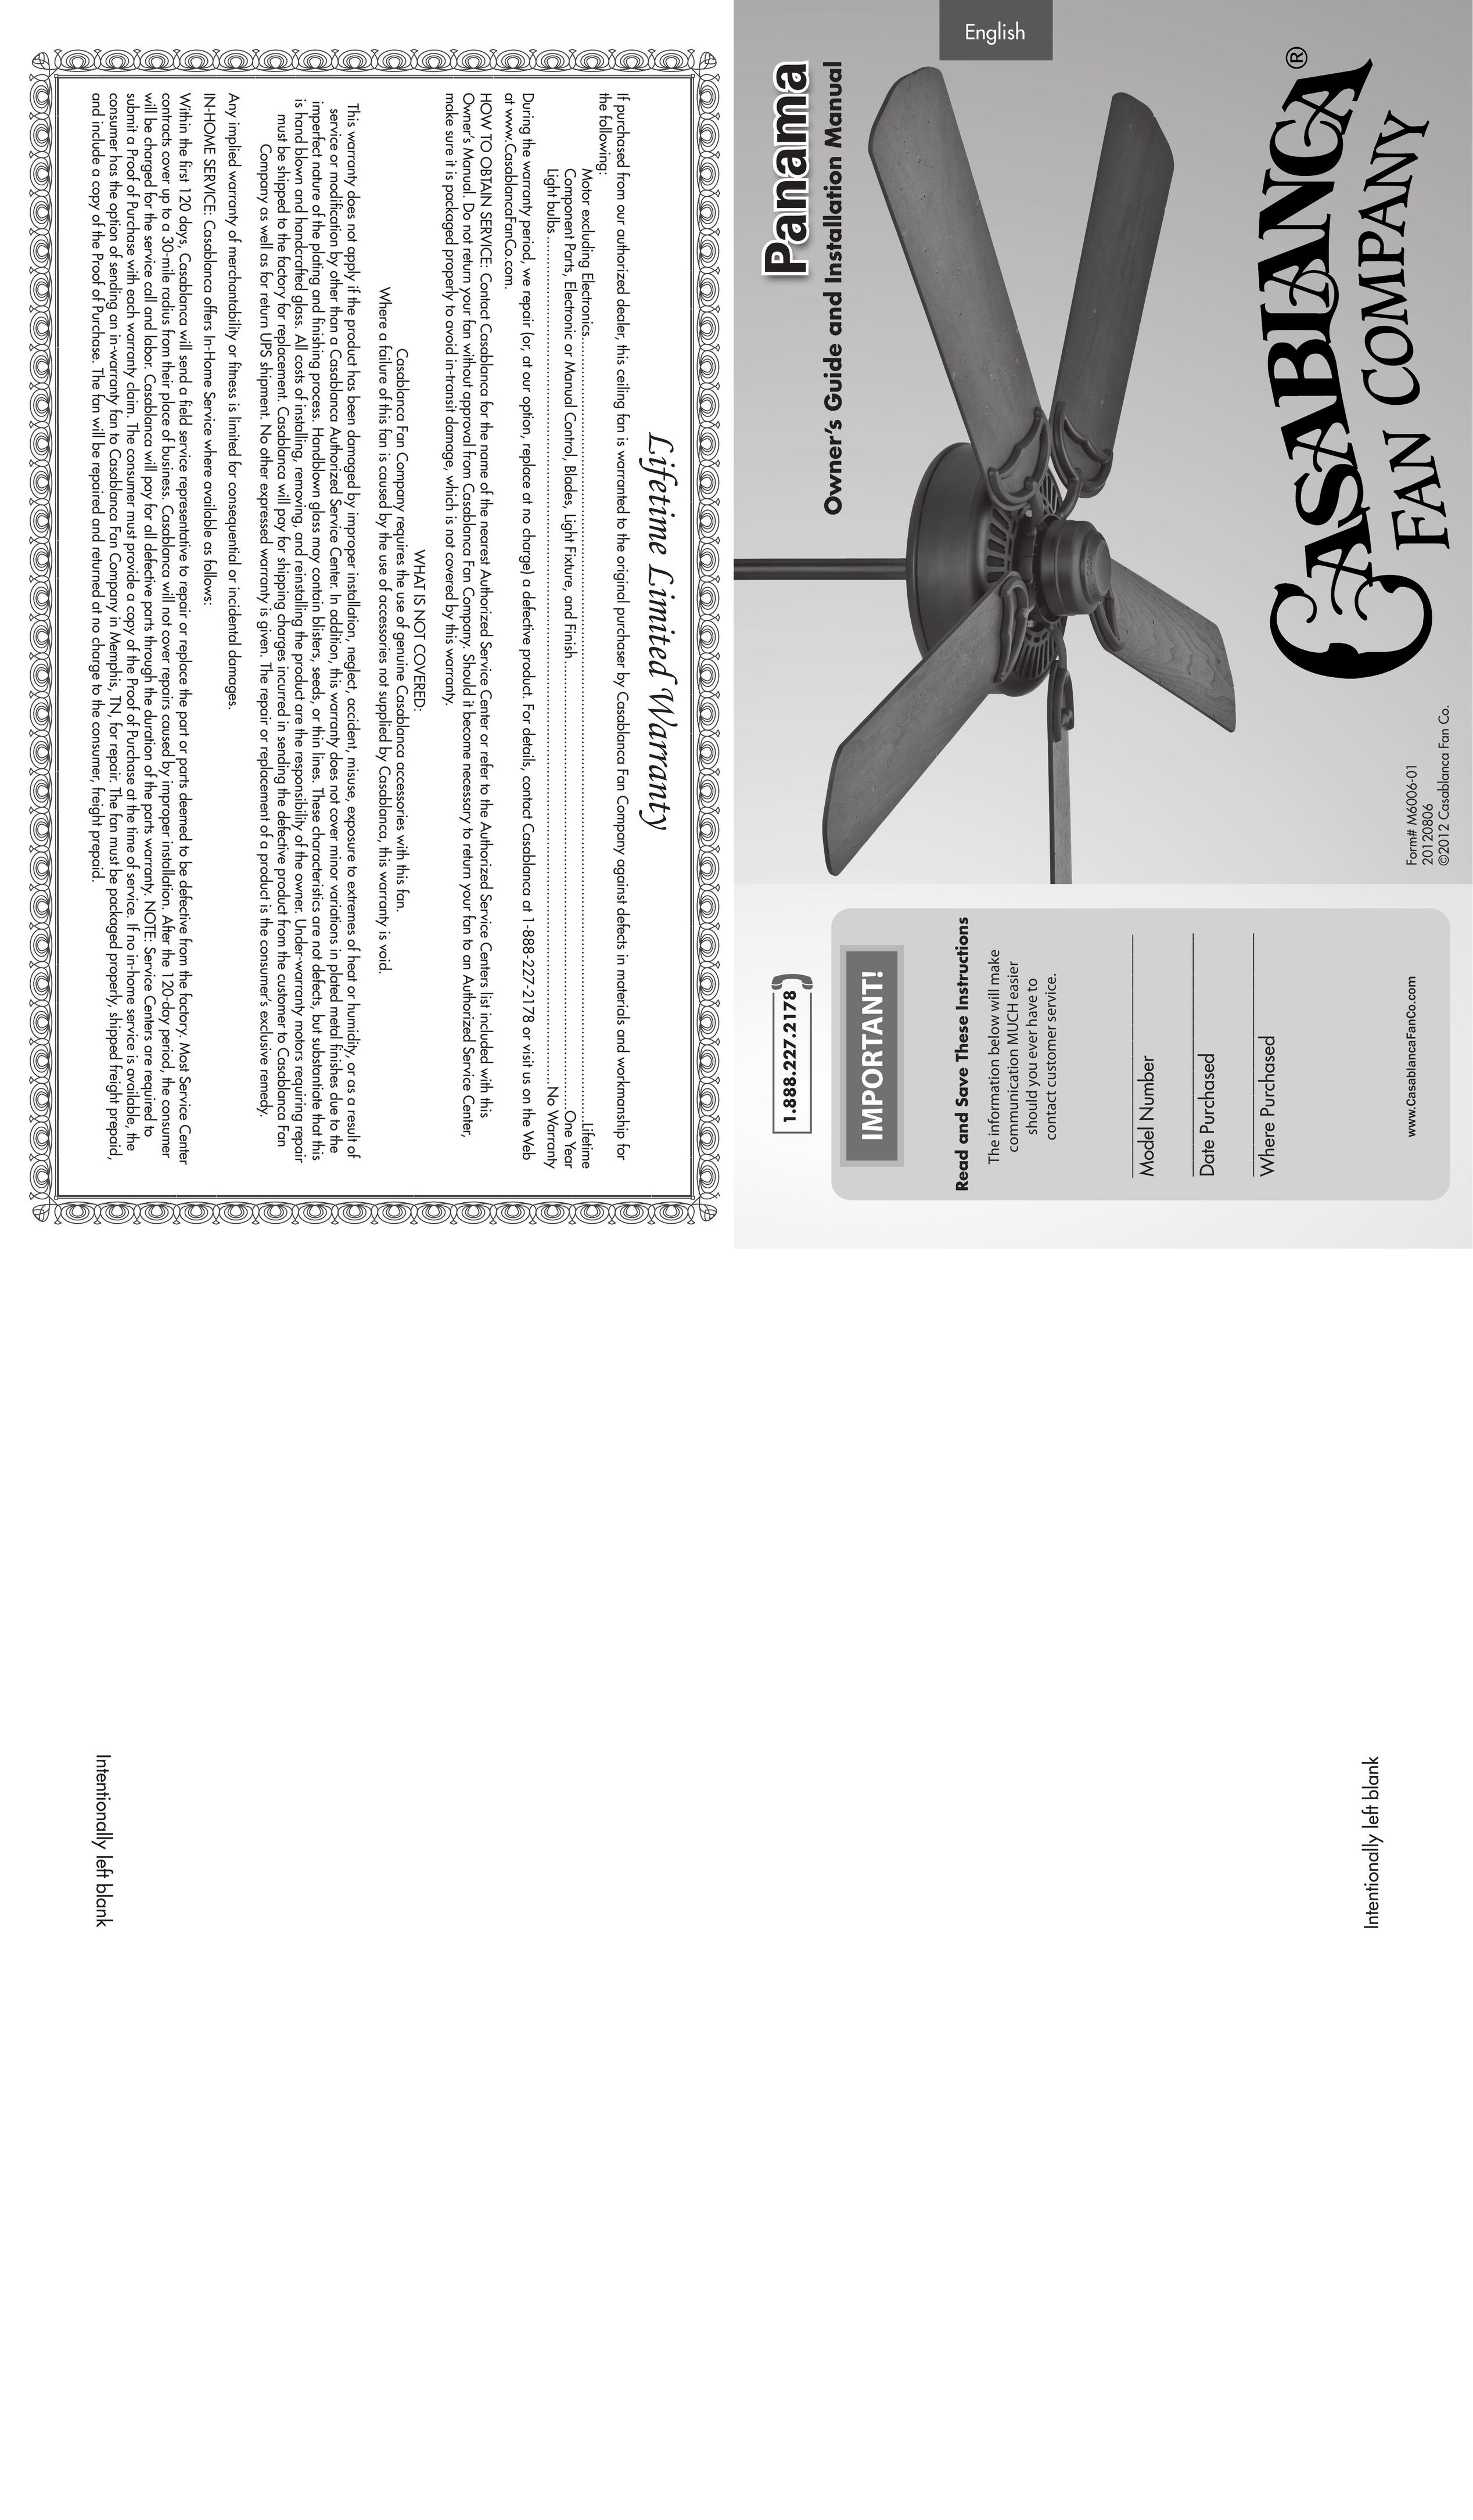 Casablanca Fan Company 59512 Pet Fence User Manual